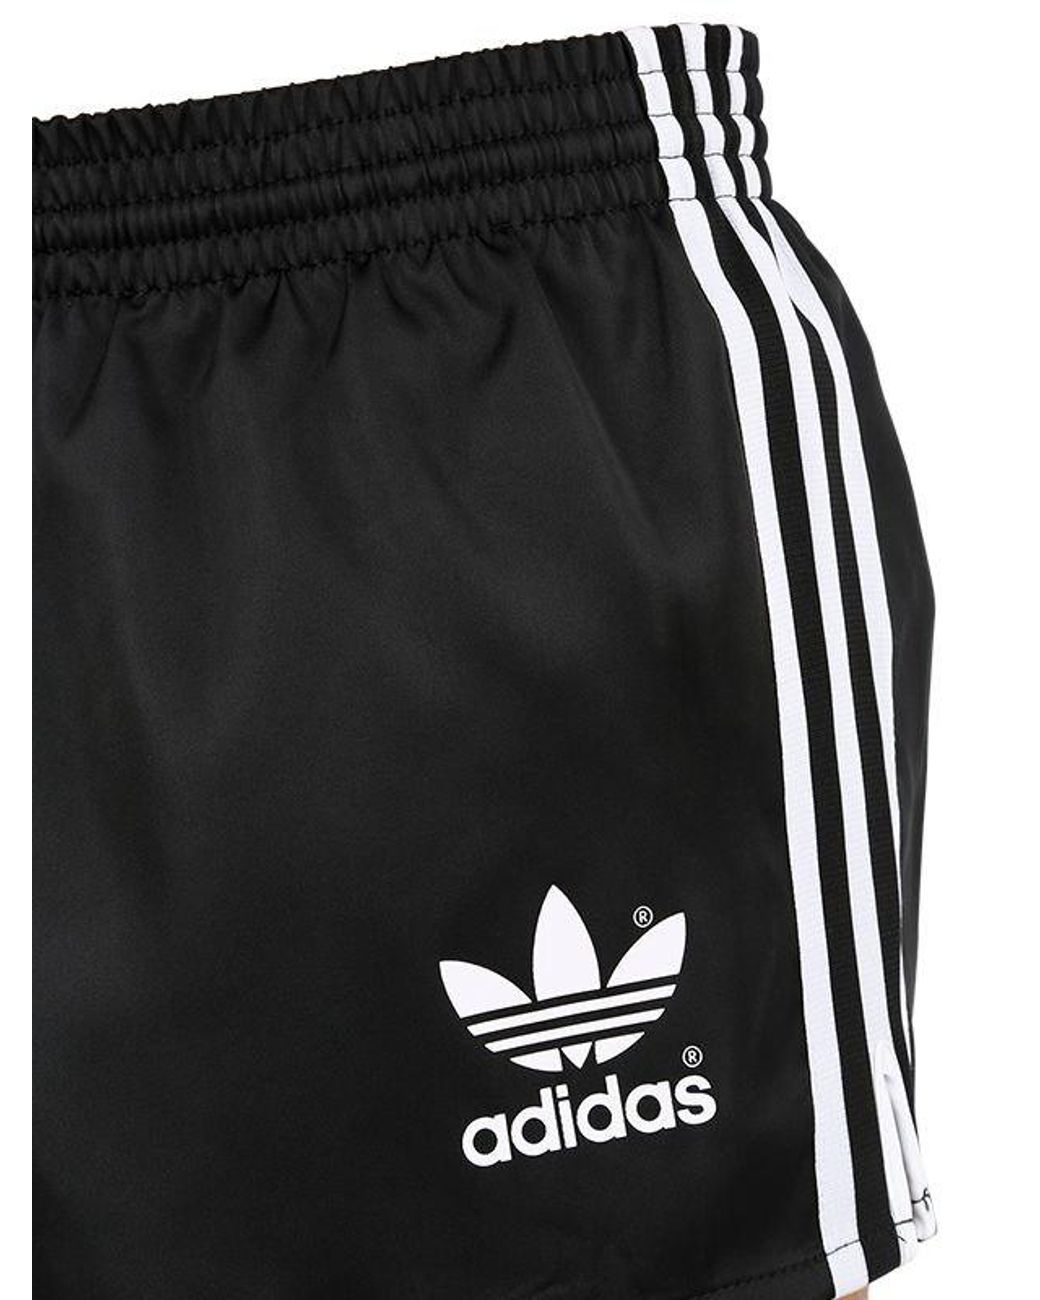 adidas Originals Argentina 1987 Football Shorts in Black for Men | Lyst UK